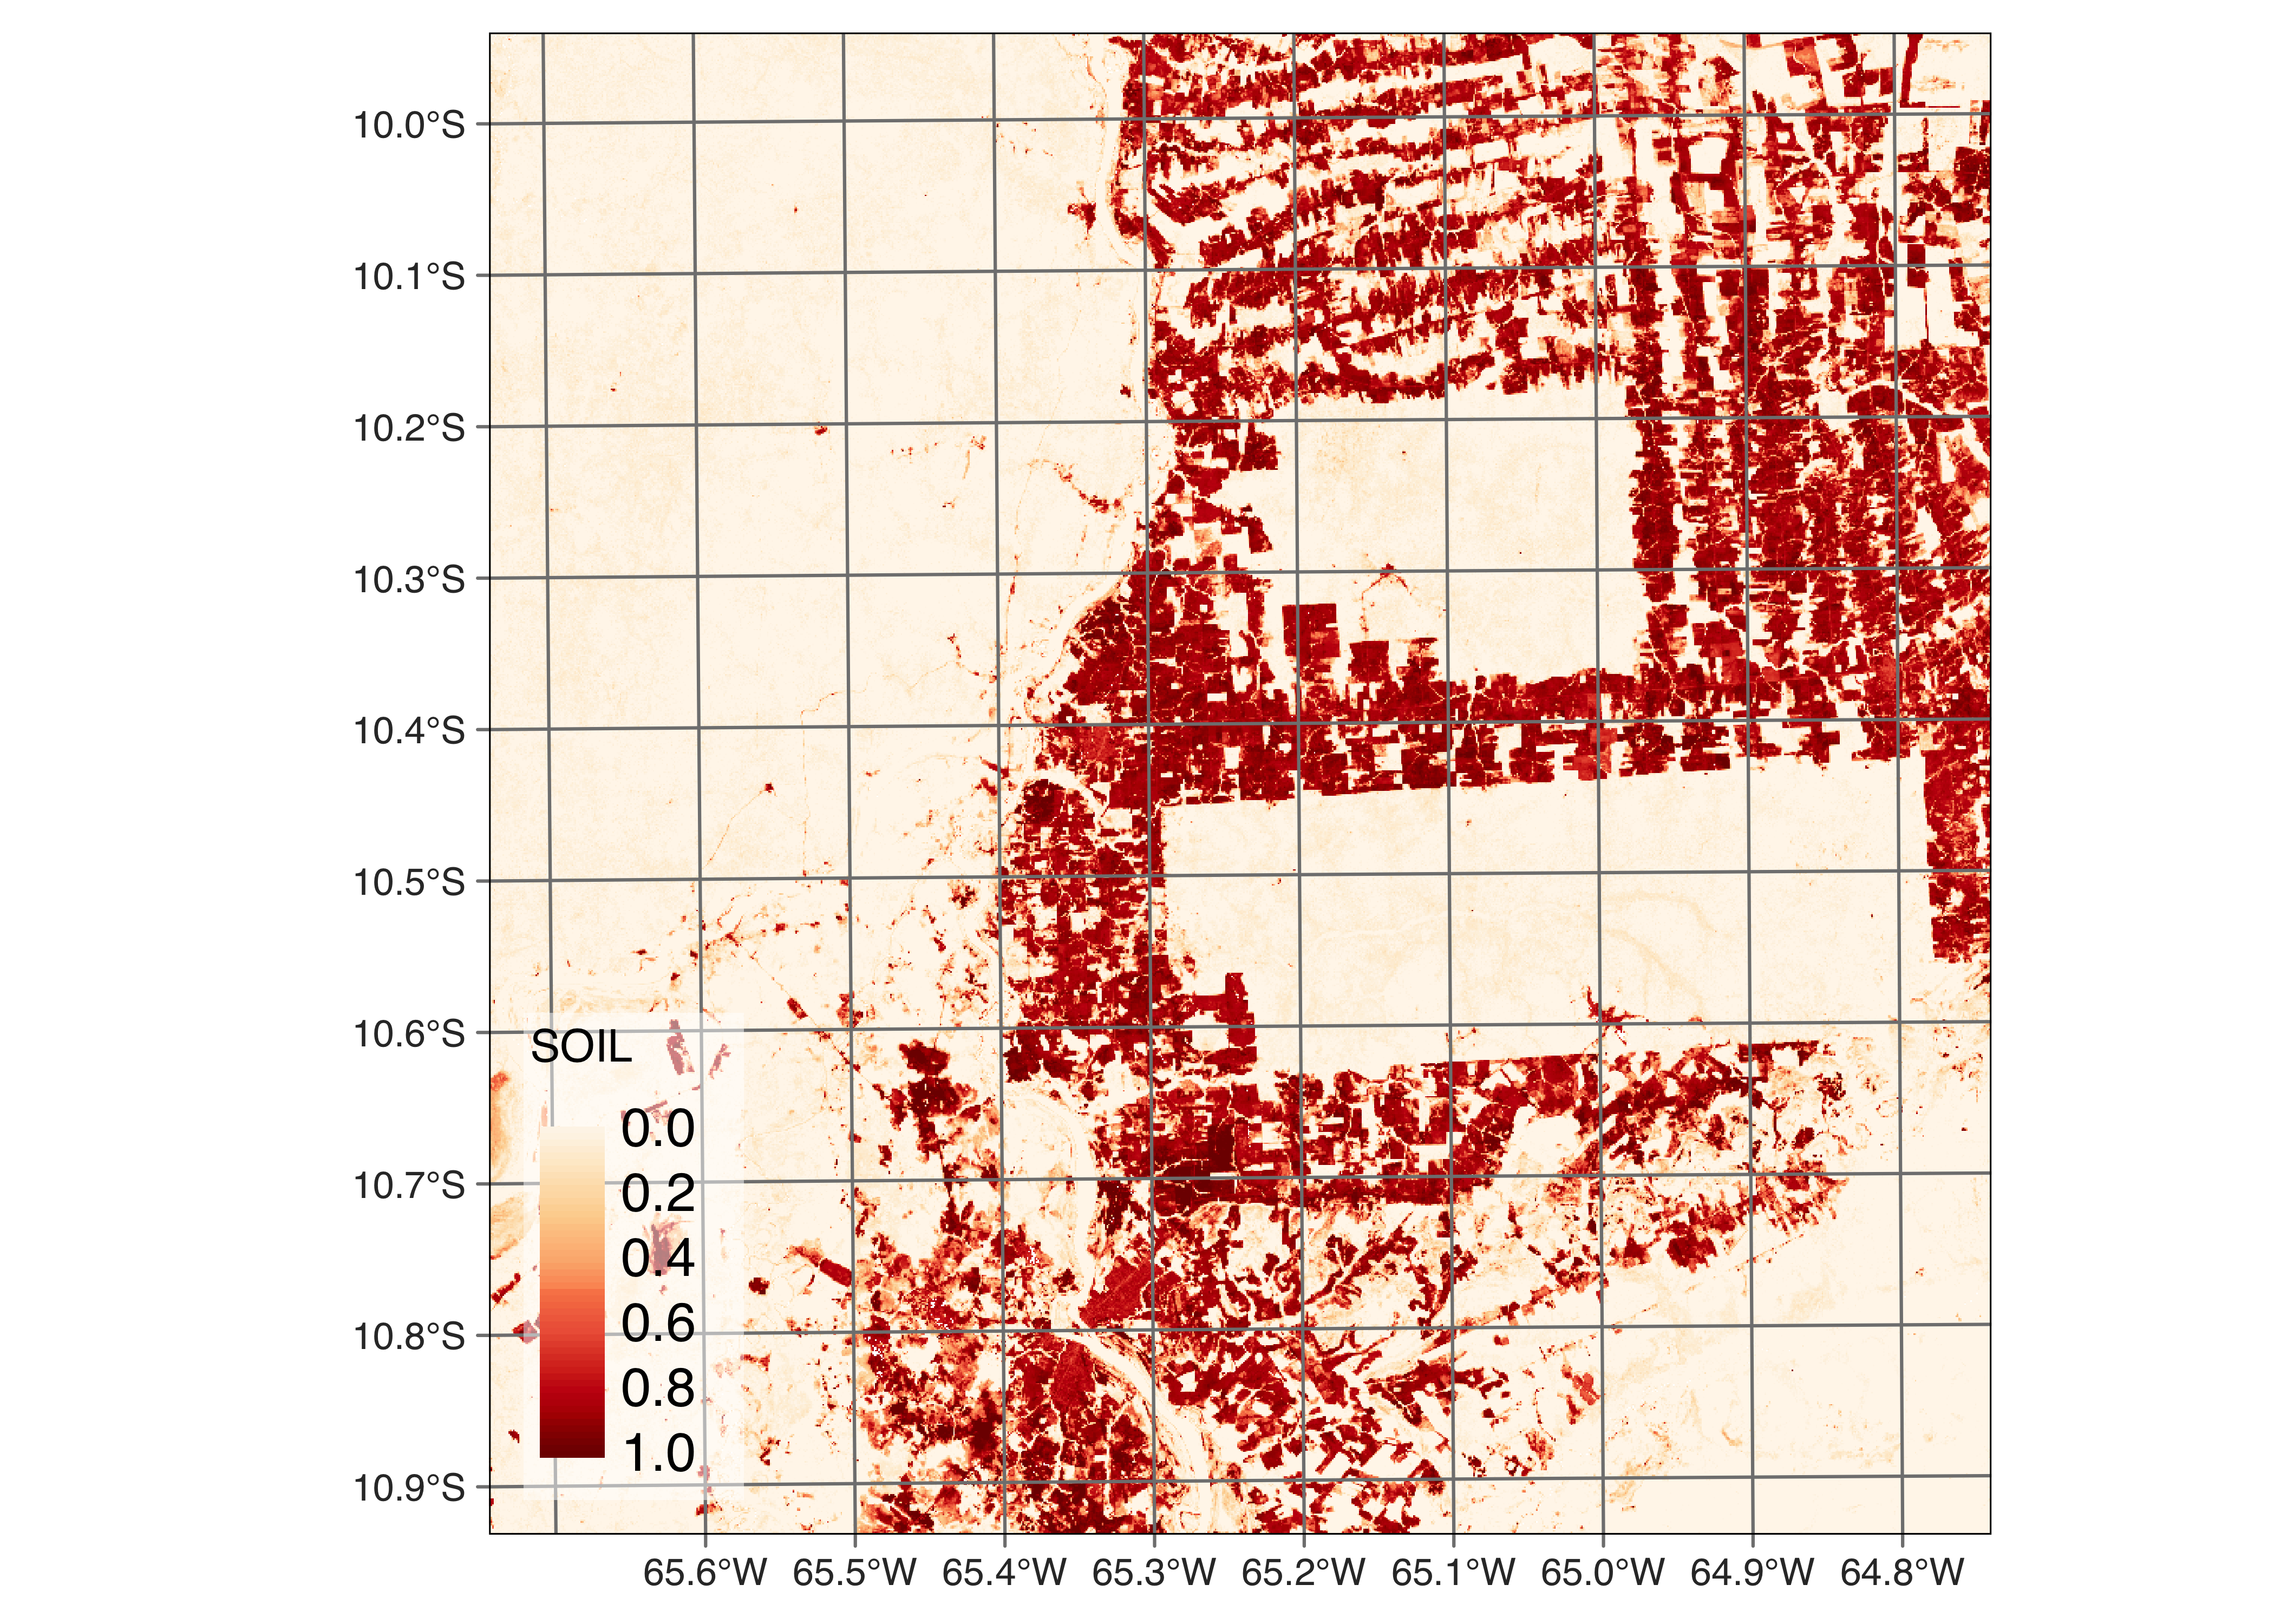 Percentage of soil per pixel estimated by mixture model (Source: Authors).